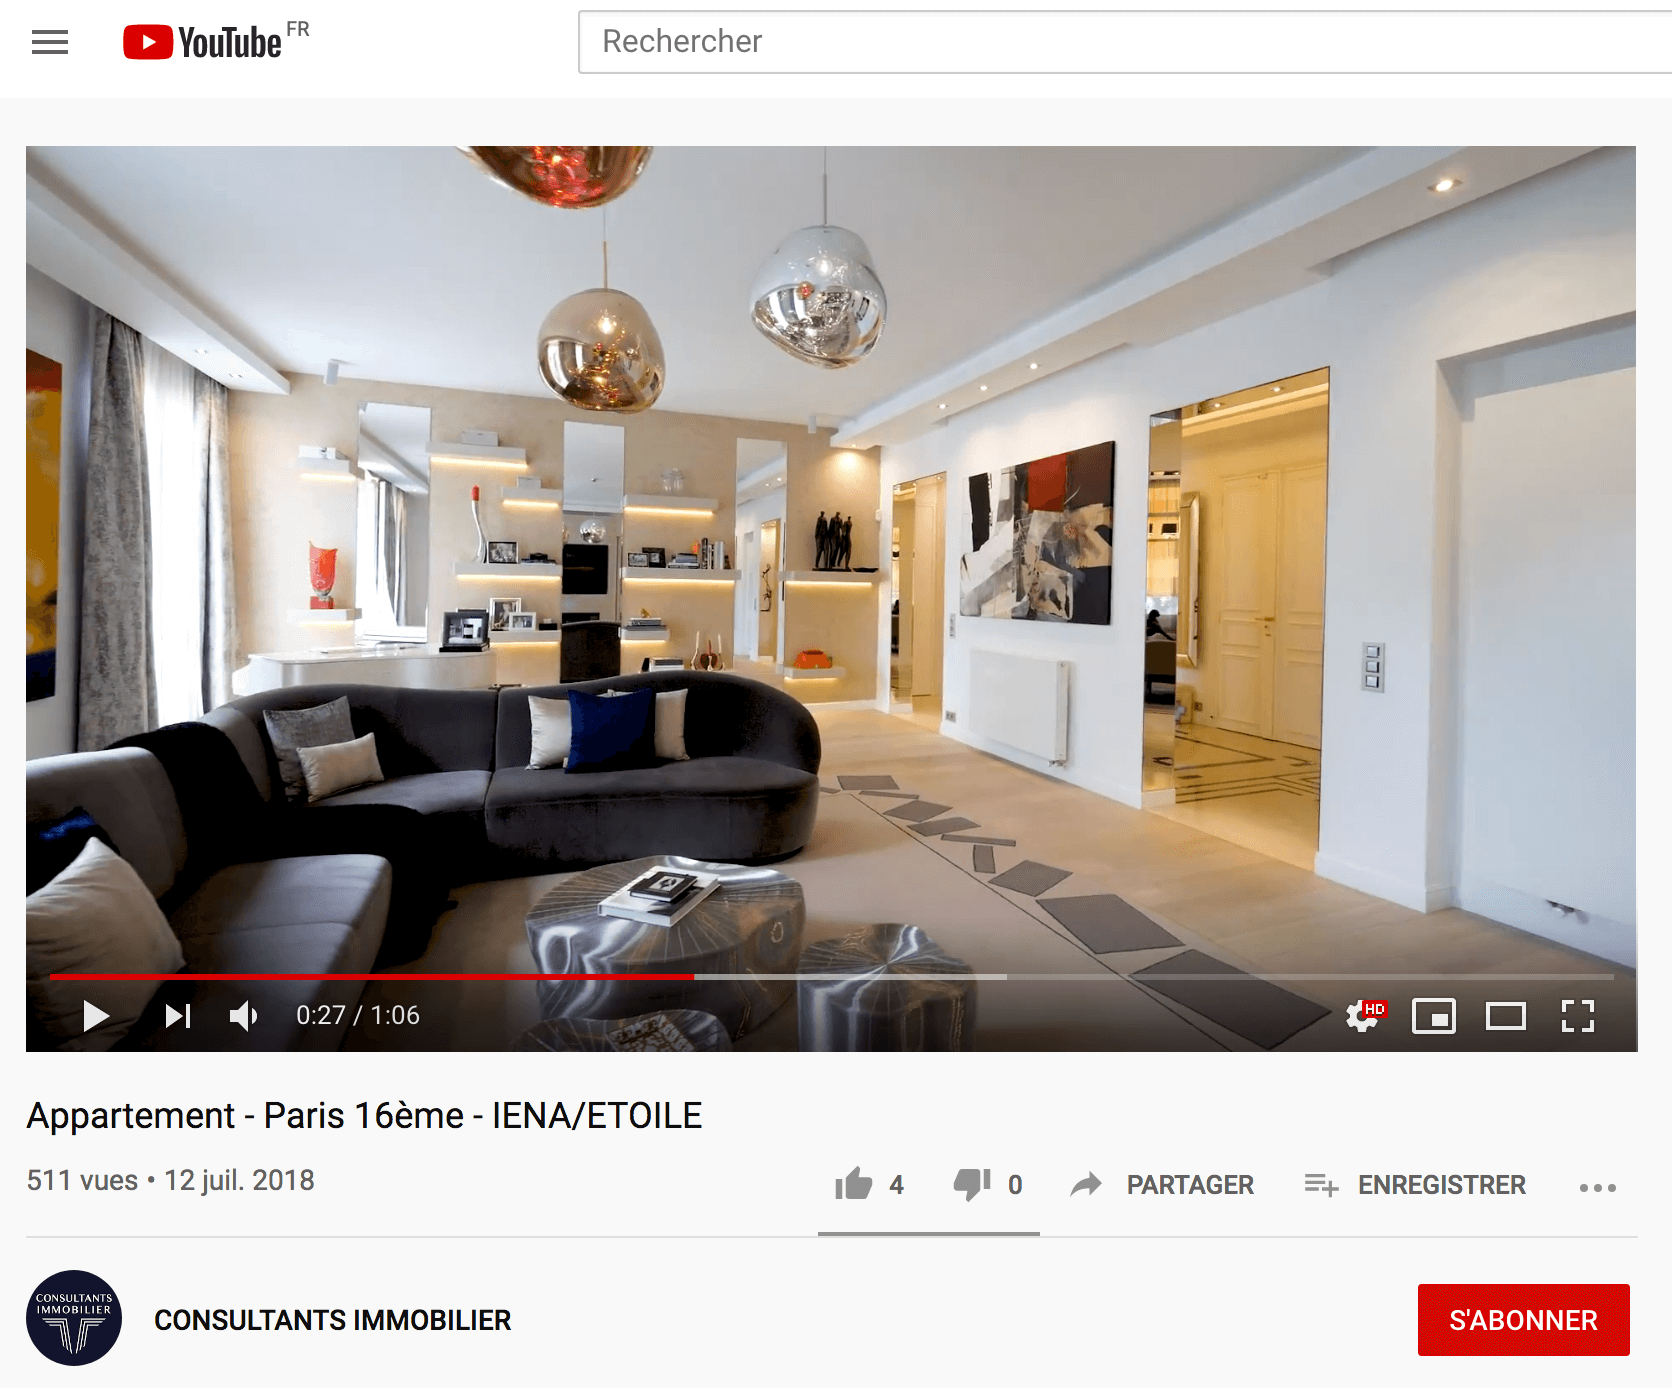 Vidéo youtube en immobilier